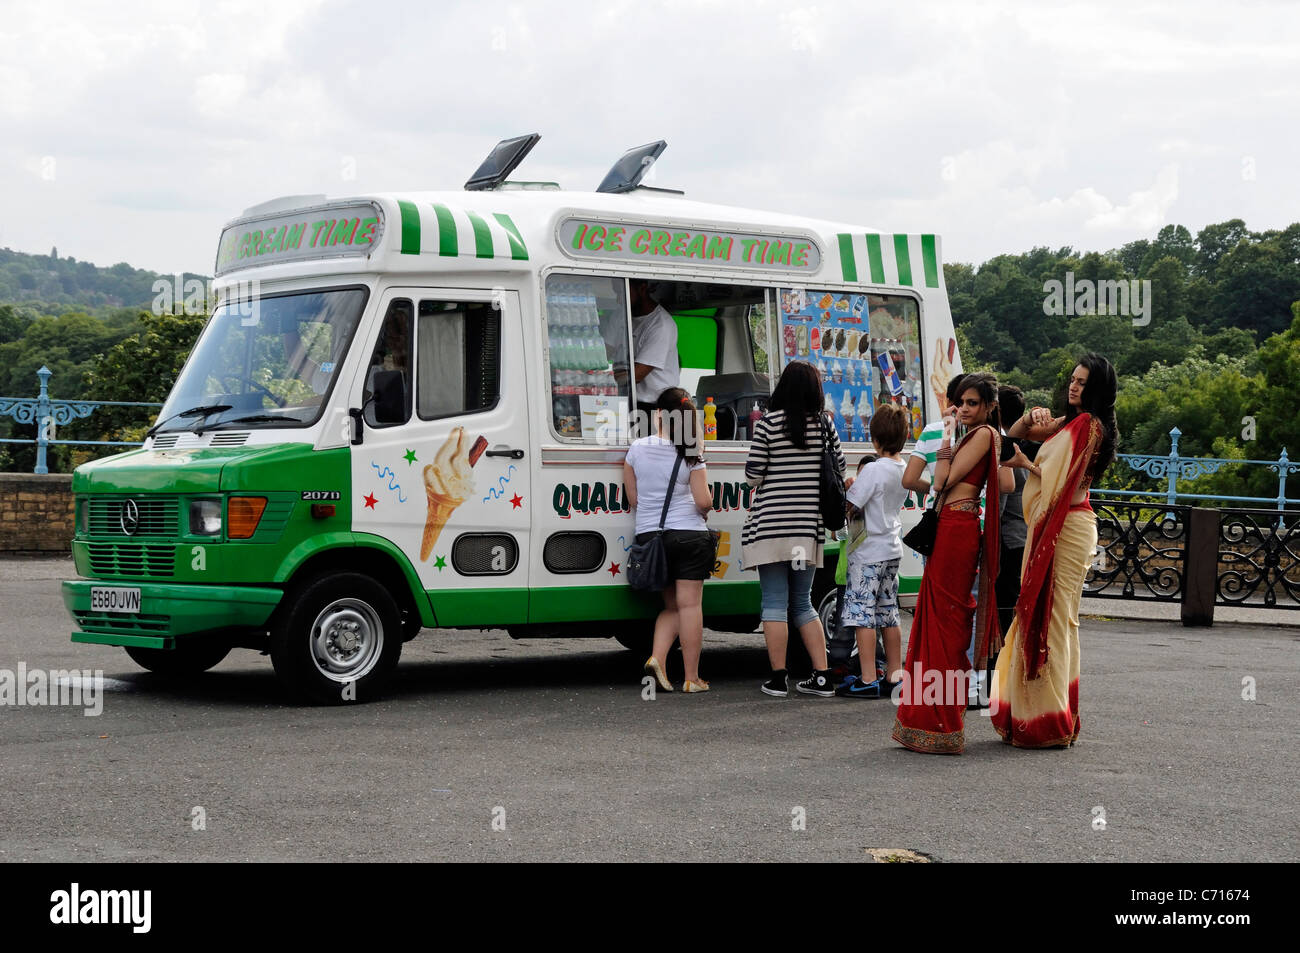 Queue of people at ice cream van Alexandra Palace London England UK Stock Photo